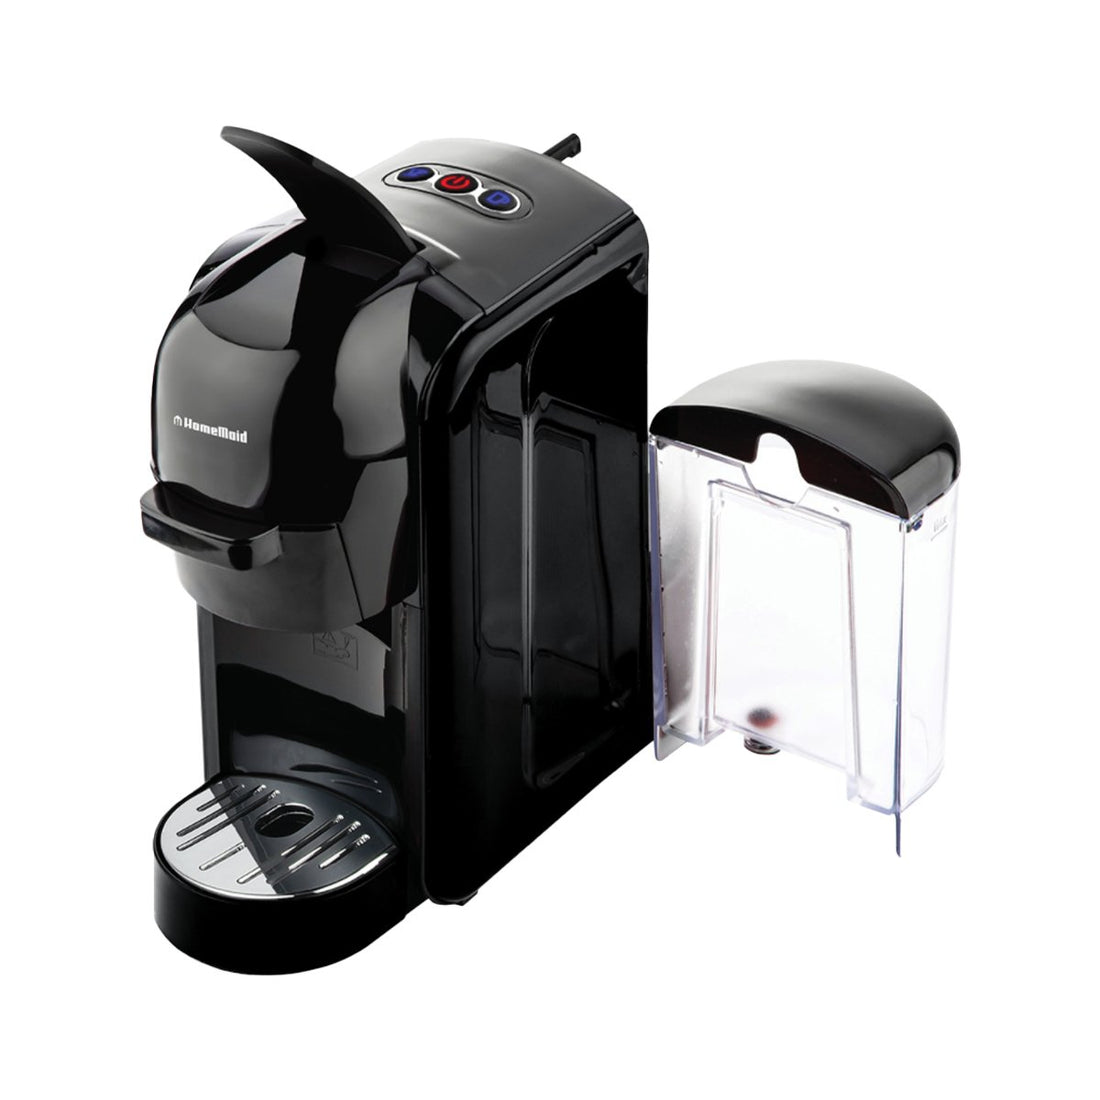 Homemaid 3-in-1 Cm511hm Coffee Multi Capsule Pod Machine-Appliances &gt; Kitchen Appliances-PEROZ Accessories